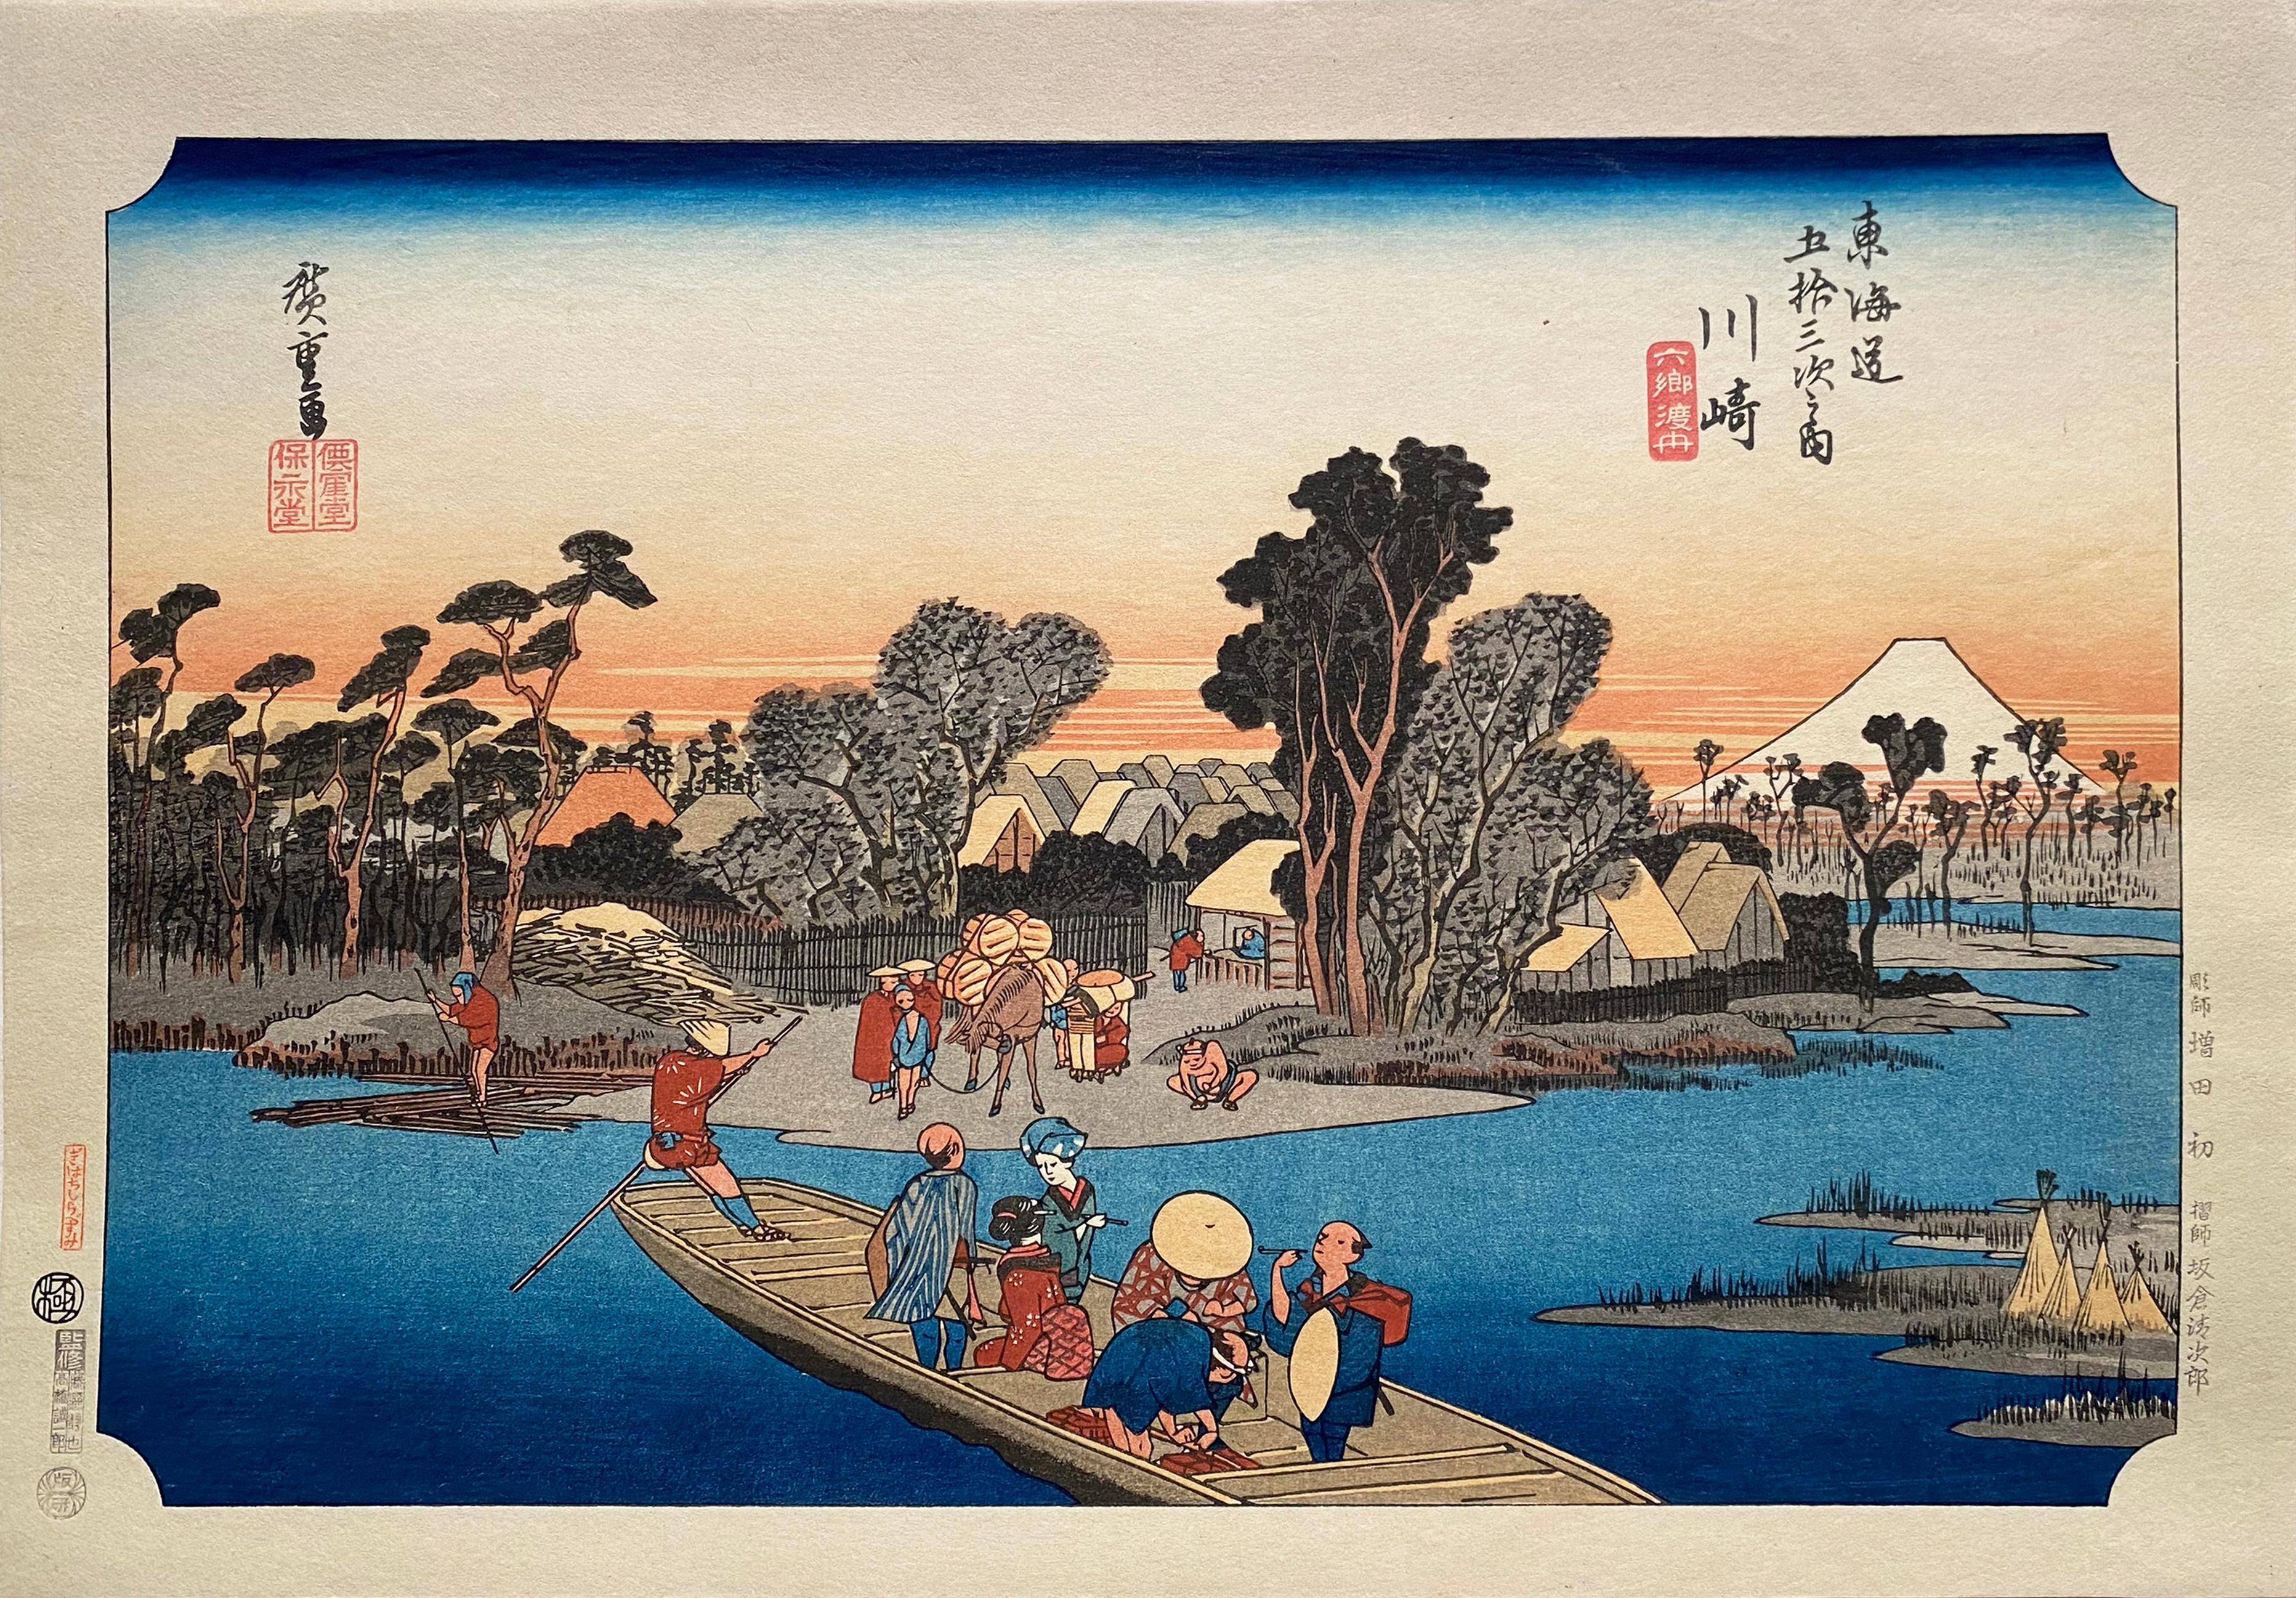 Eine Ansicht von Kawasaki", nach Utagawa Hiroshige 歌川廣重, Ukiyo-e Holzschnitt, Tokaido